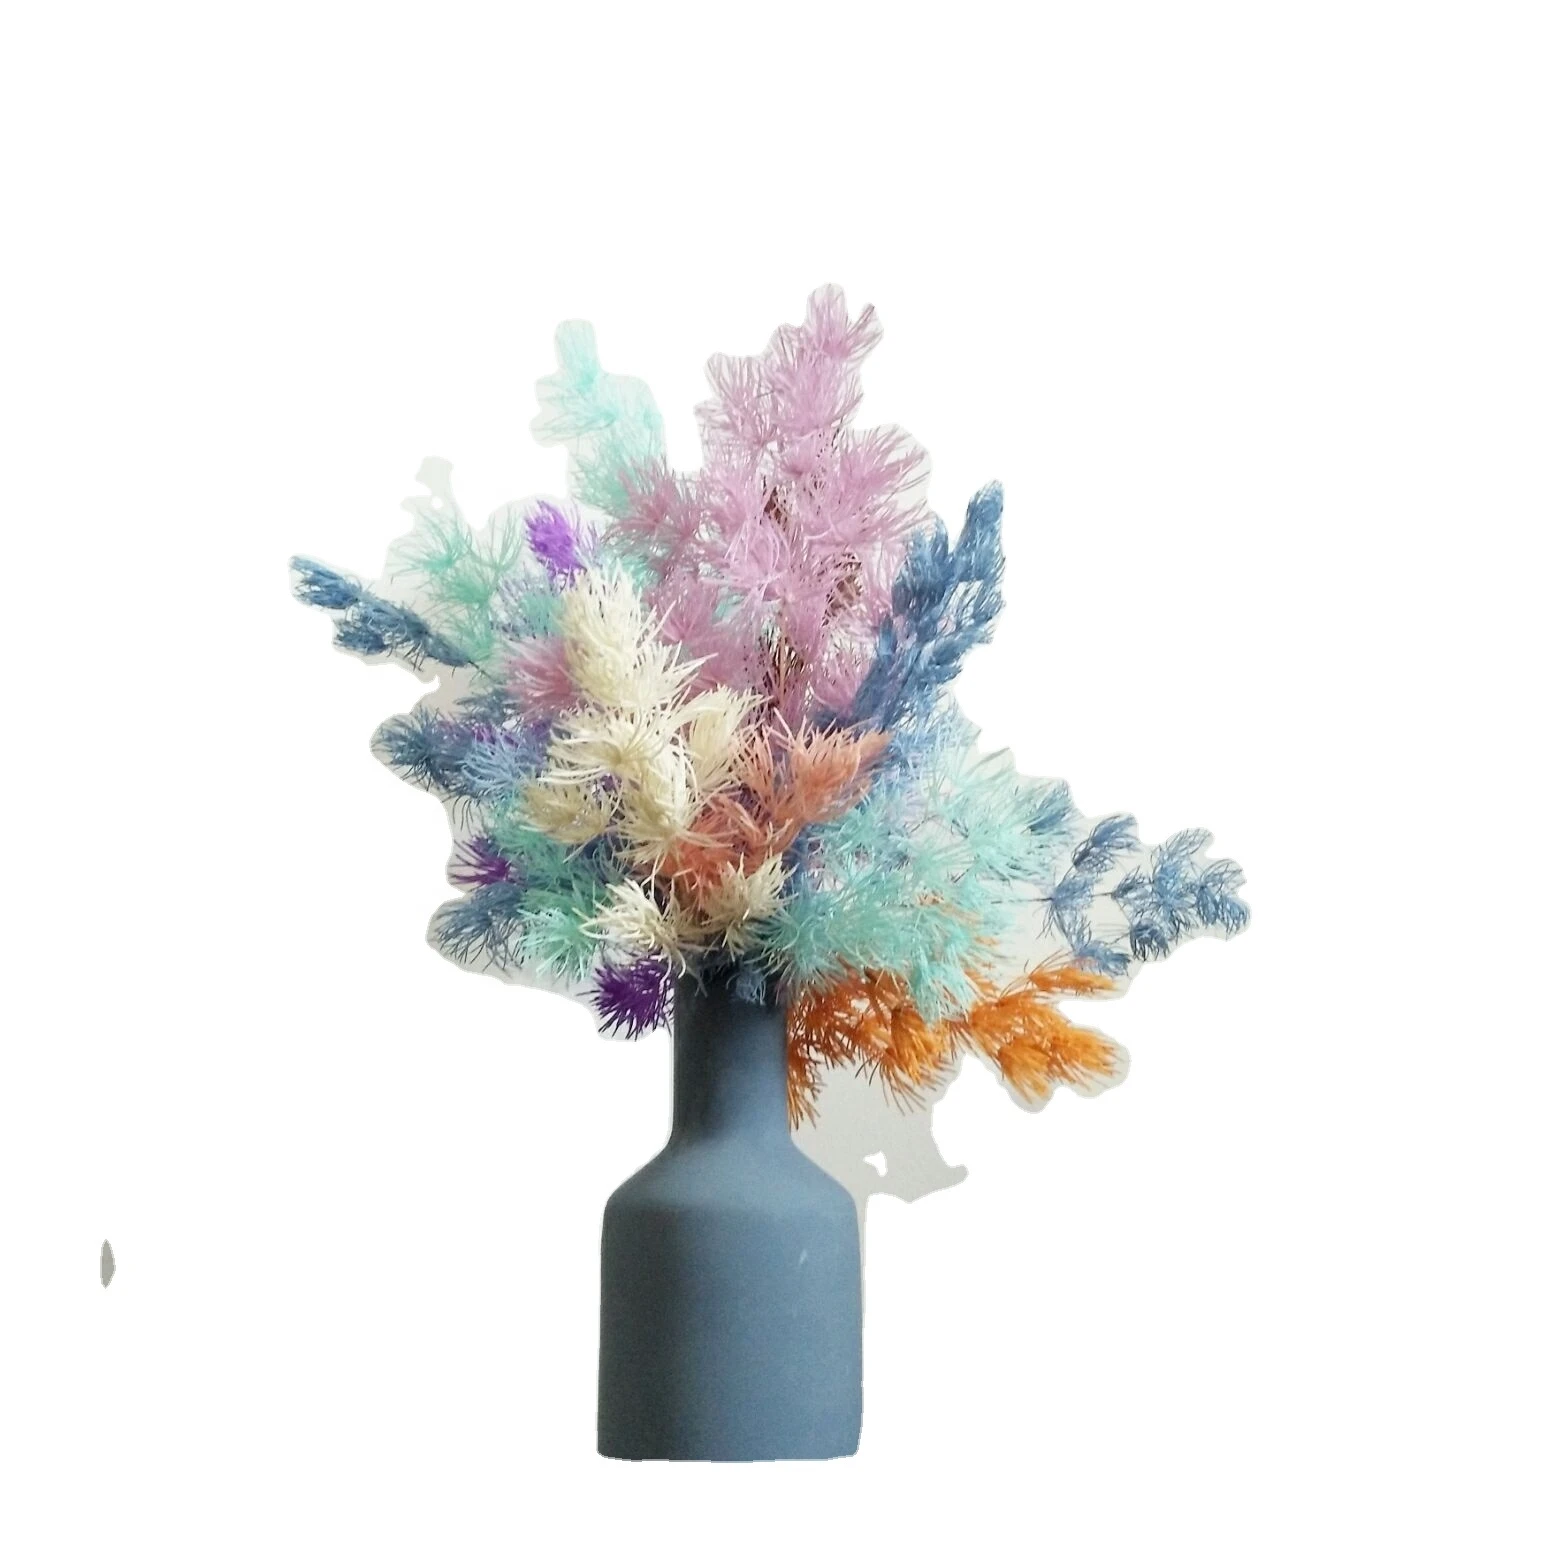 2020 best popular preserved flower fashionable preserved Asparagus myrioeladus for  home or wedding decoration